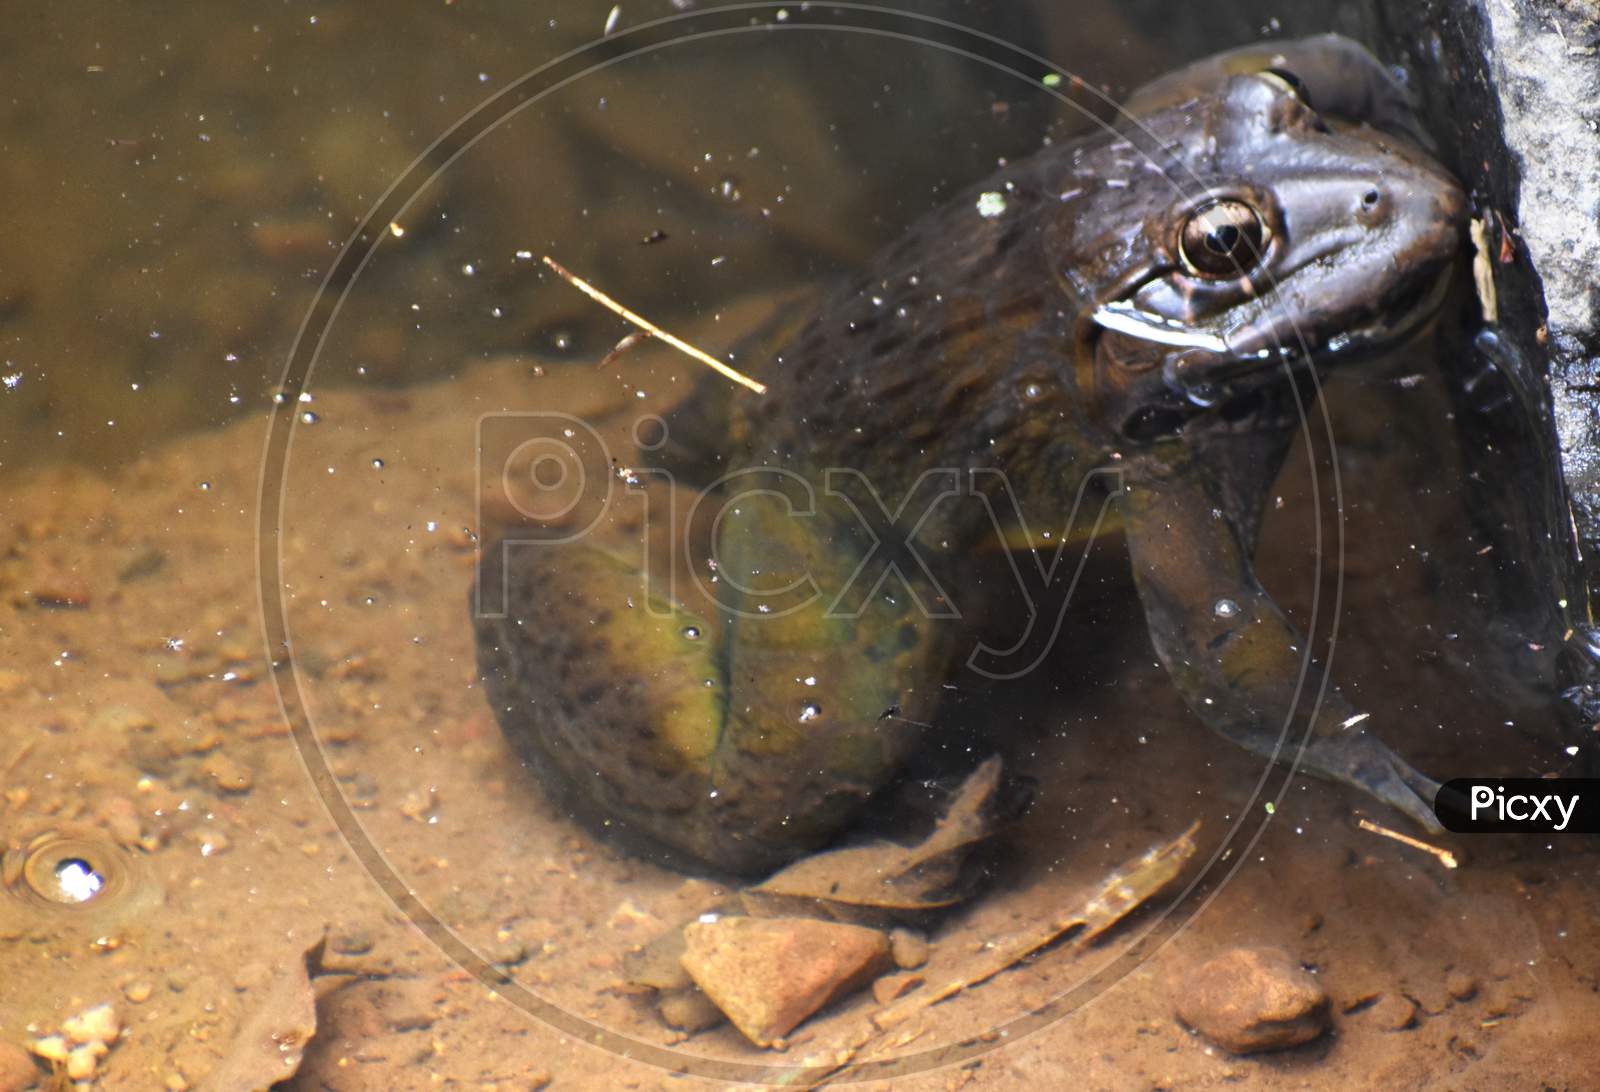 Brown Frog In Water